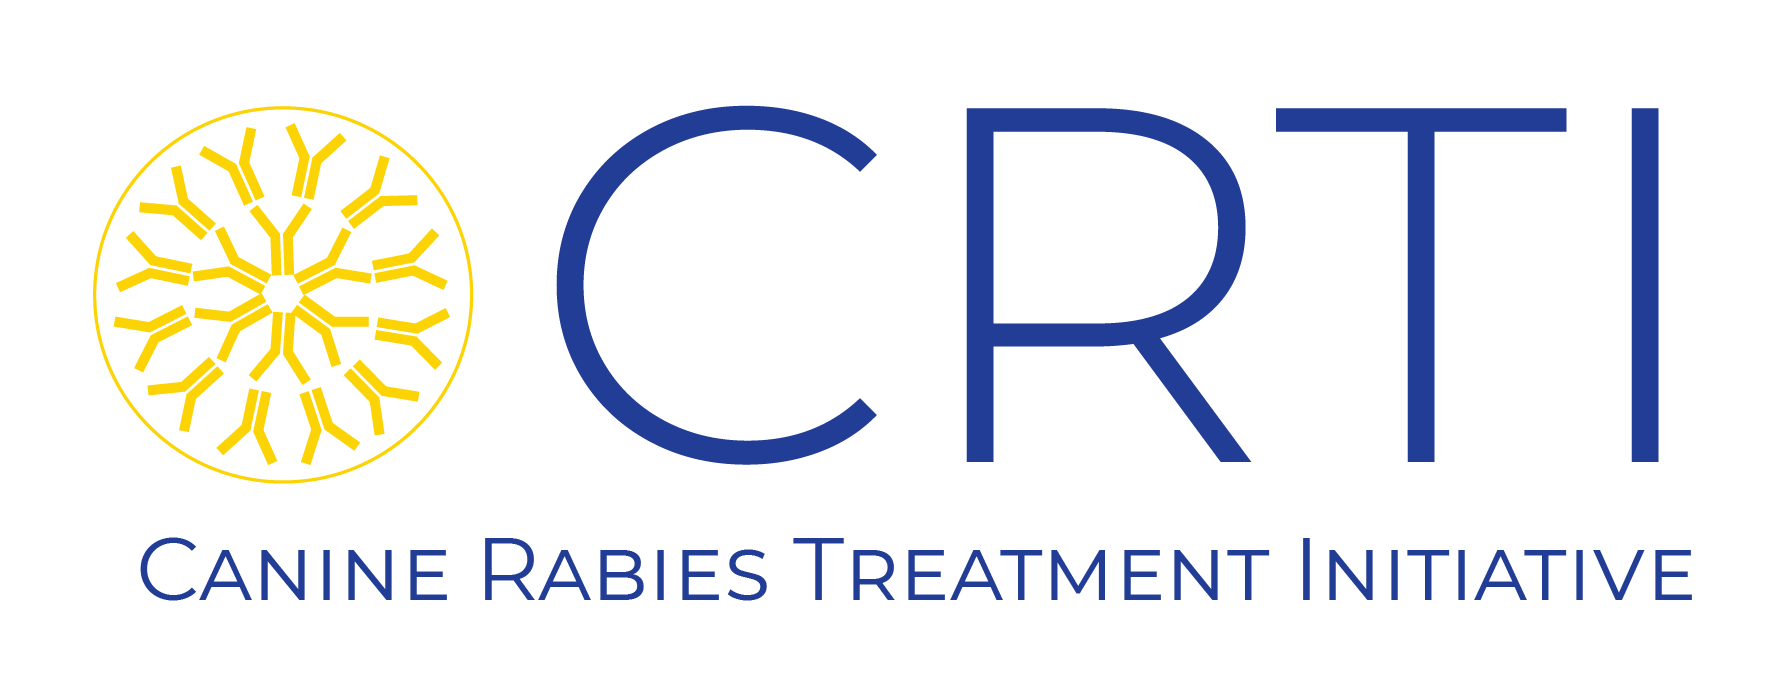 Canine Rabies Treatment Initiative logo